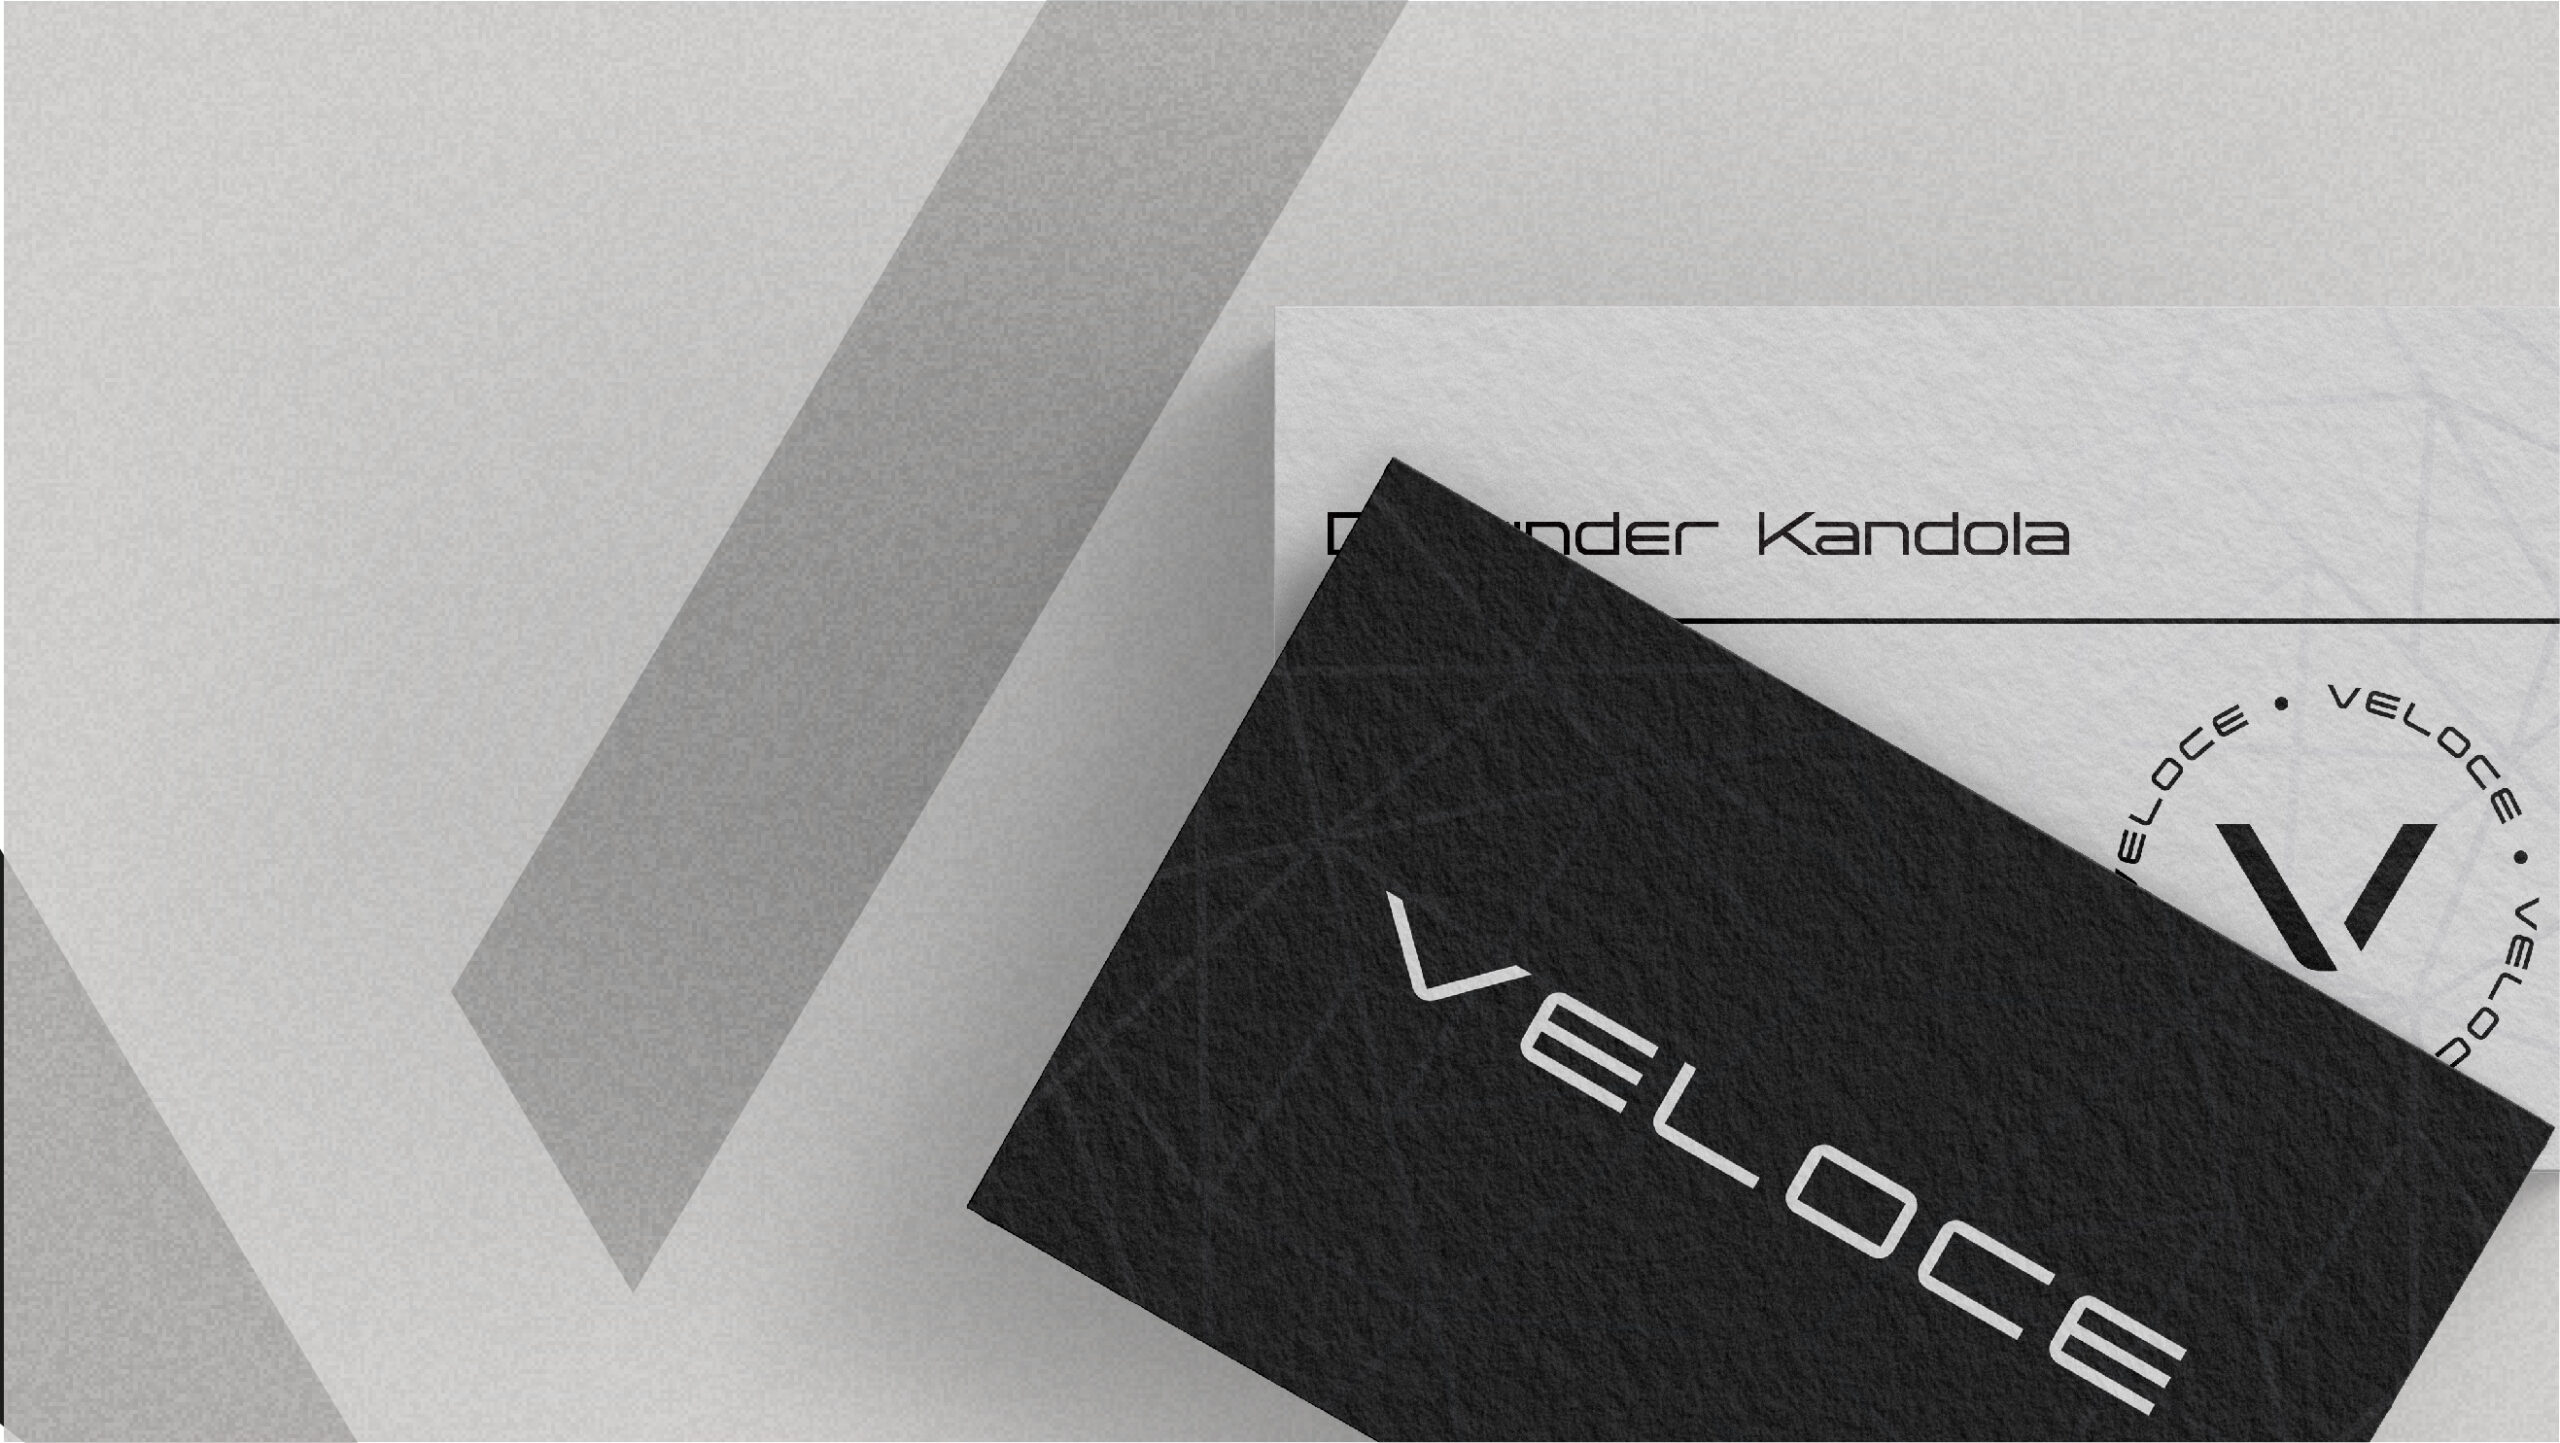 Veloce – Logo Designs